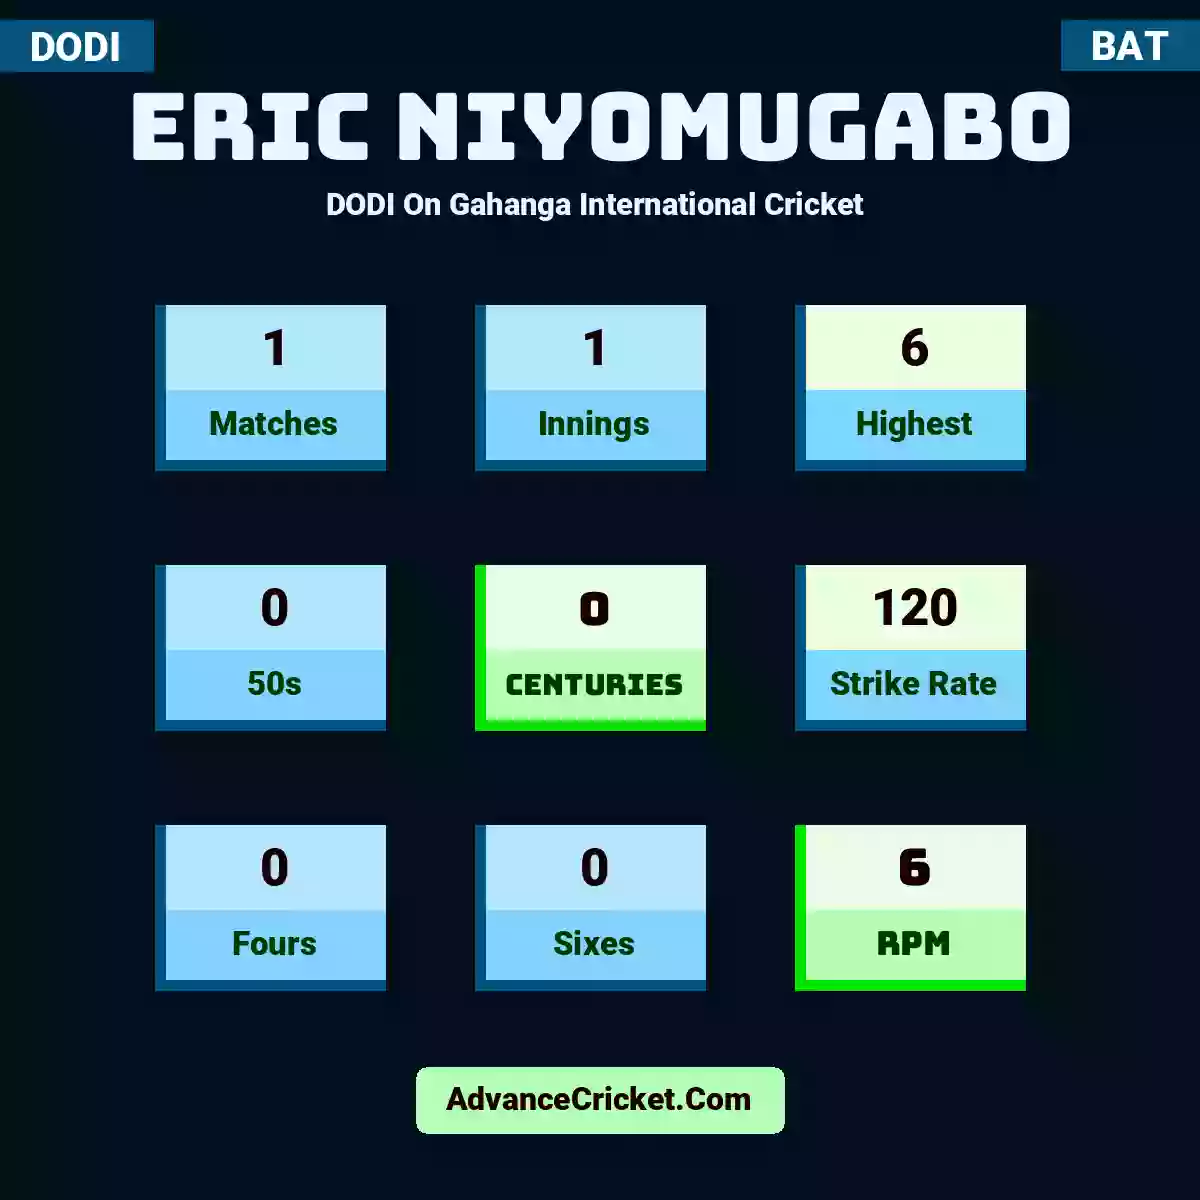 Eric Niyomugabo DODI  On Gahanga International Cricket , Eric Niyomugabo played 1 matches, scored 6 runs as highest, 0 half-centuries, and 0 centuries, with a strike rate of 120. E.Niyomugabo hit 0 fours and 0 sixes, with an RPM of 6.